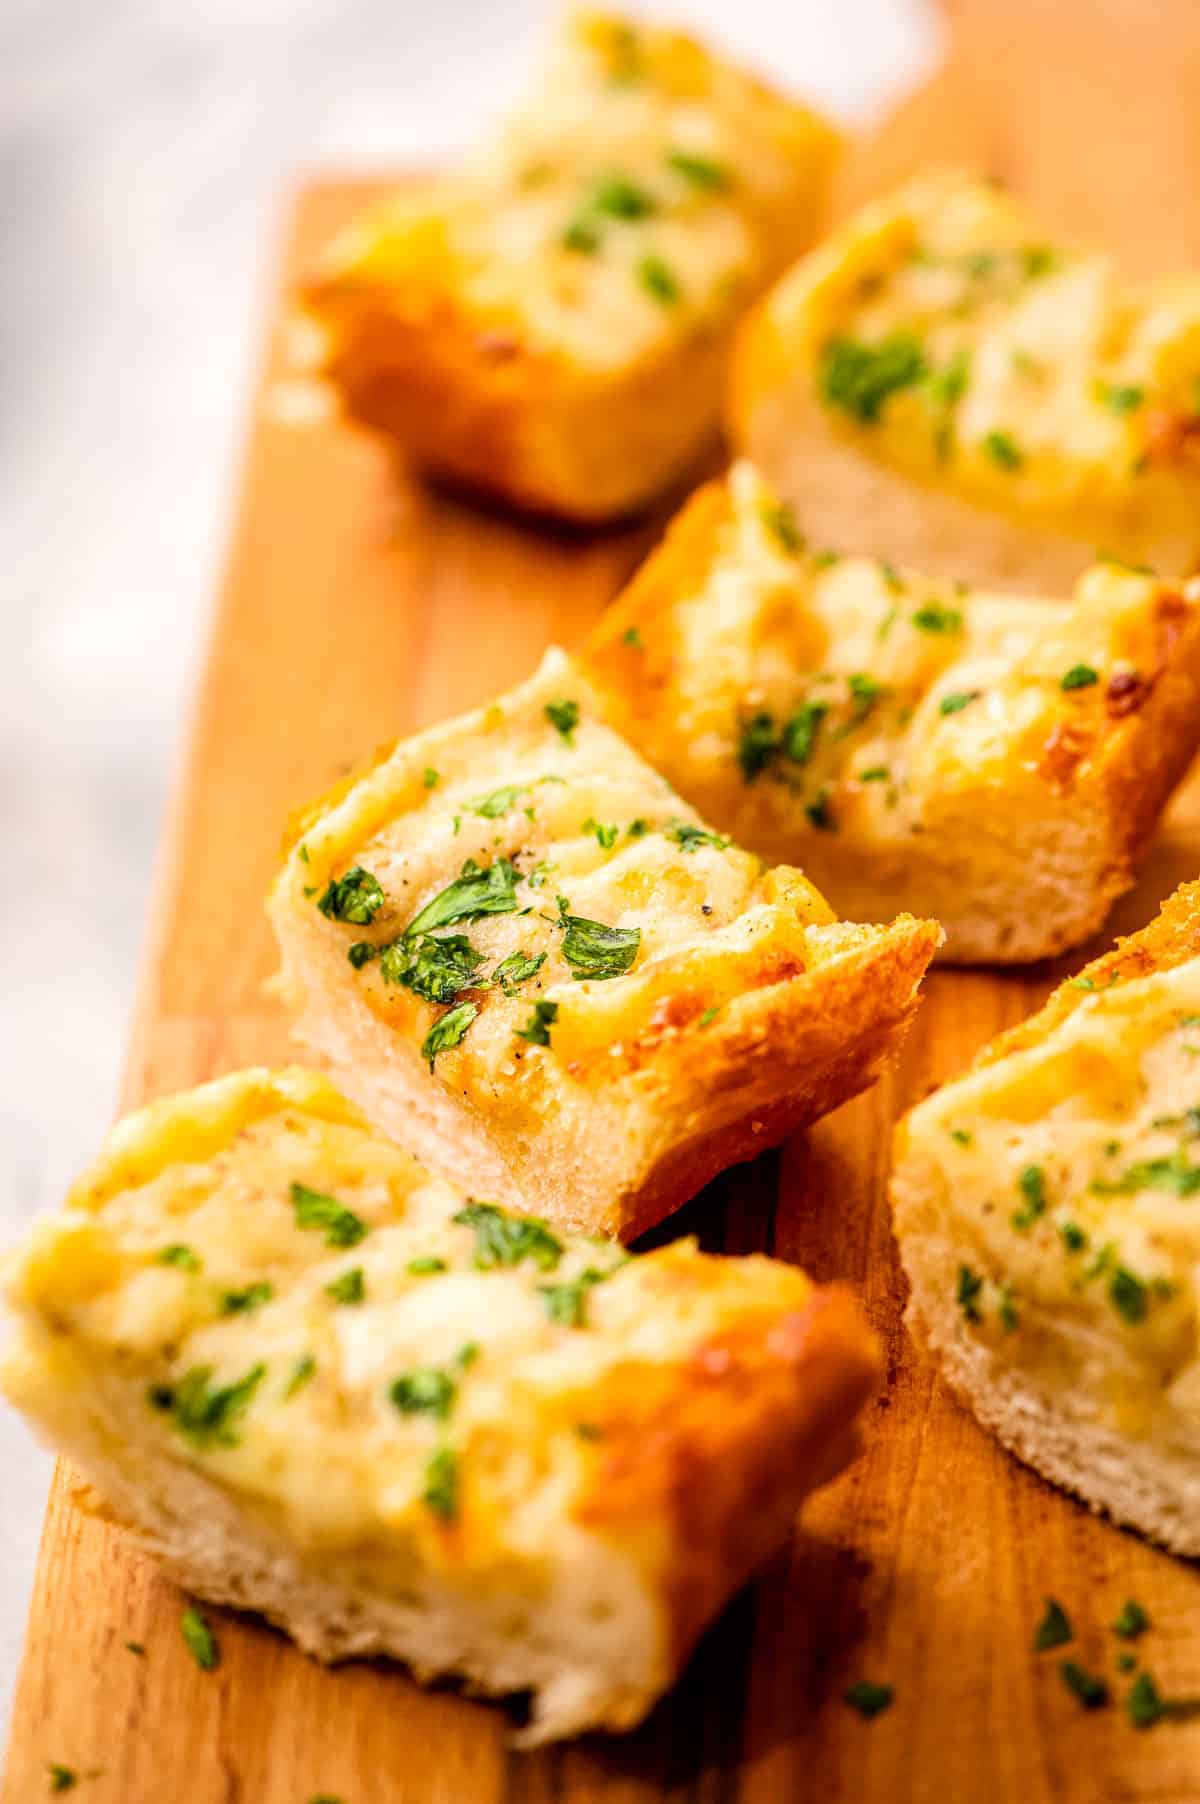 Slice of cheesy garlic bread on a wooden platter